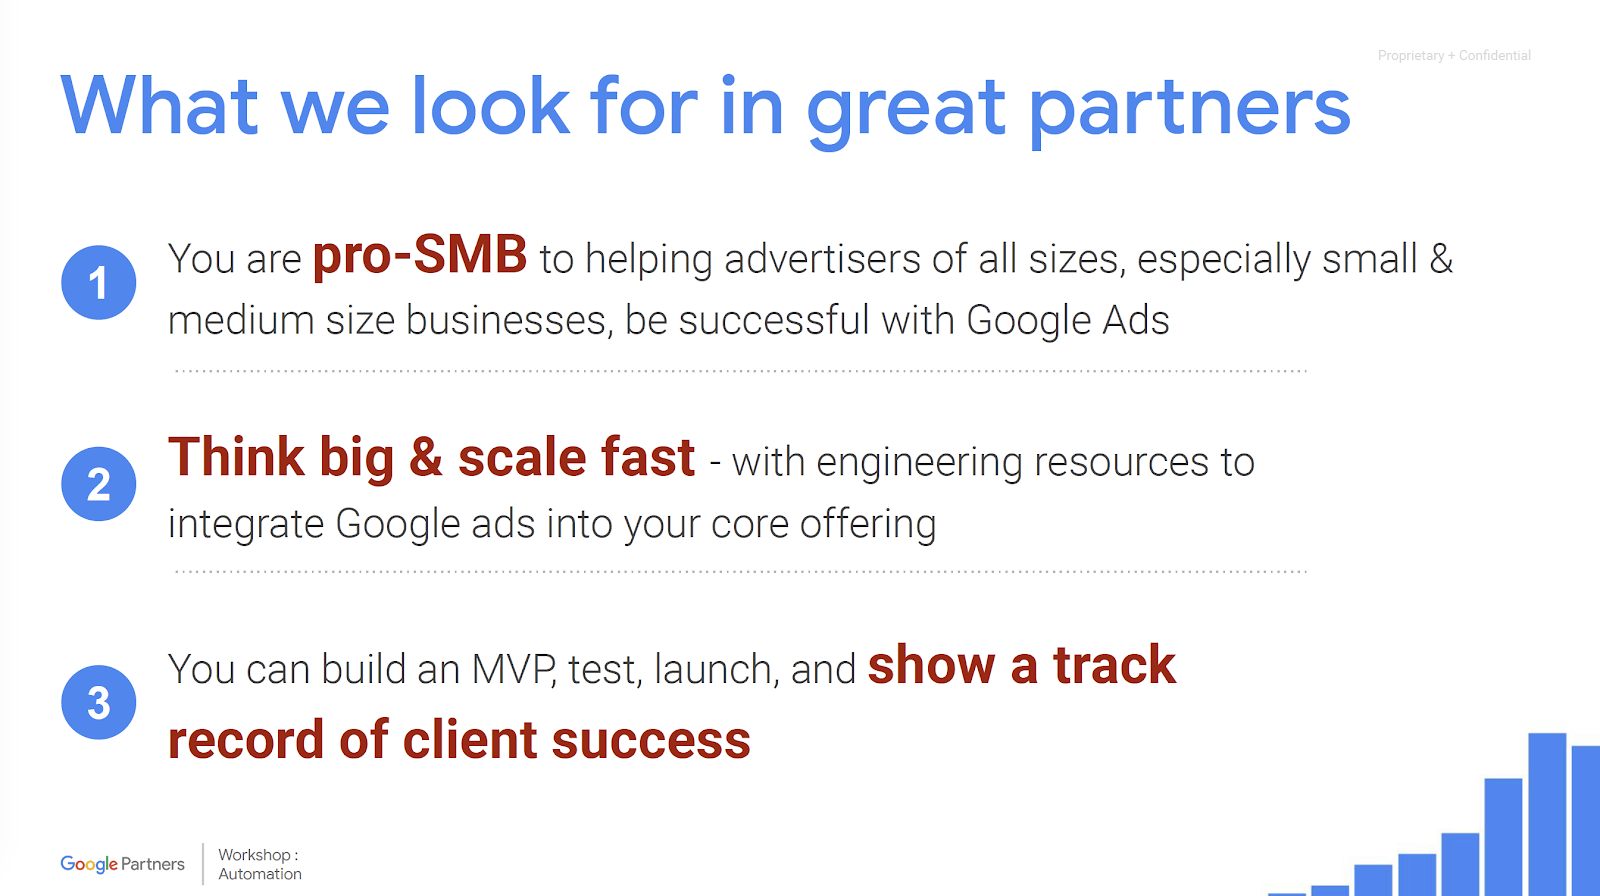 A1 Google-Partners